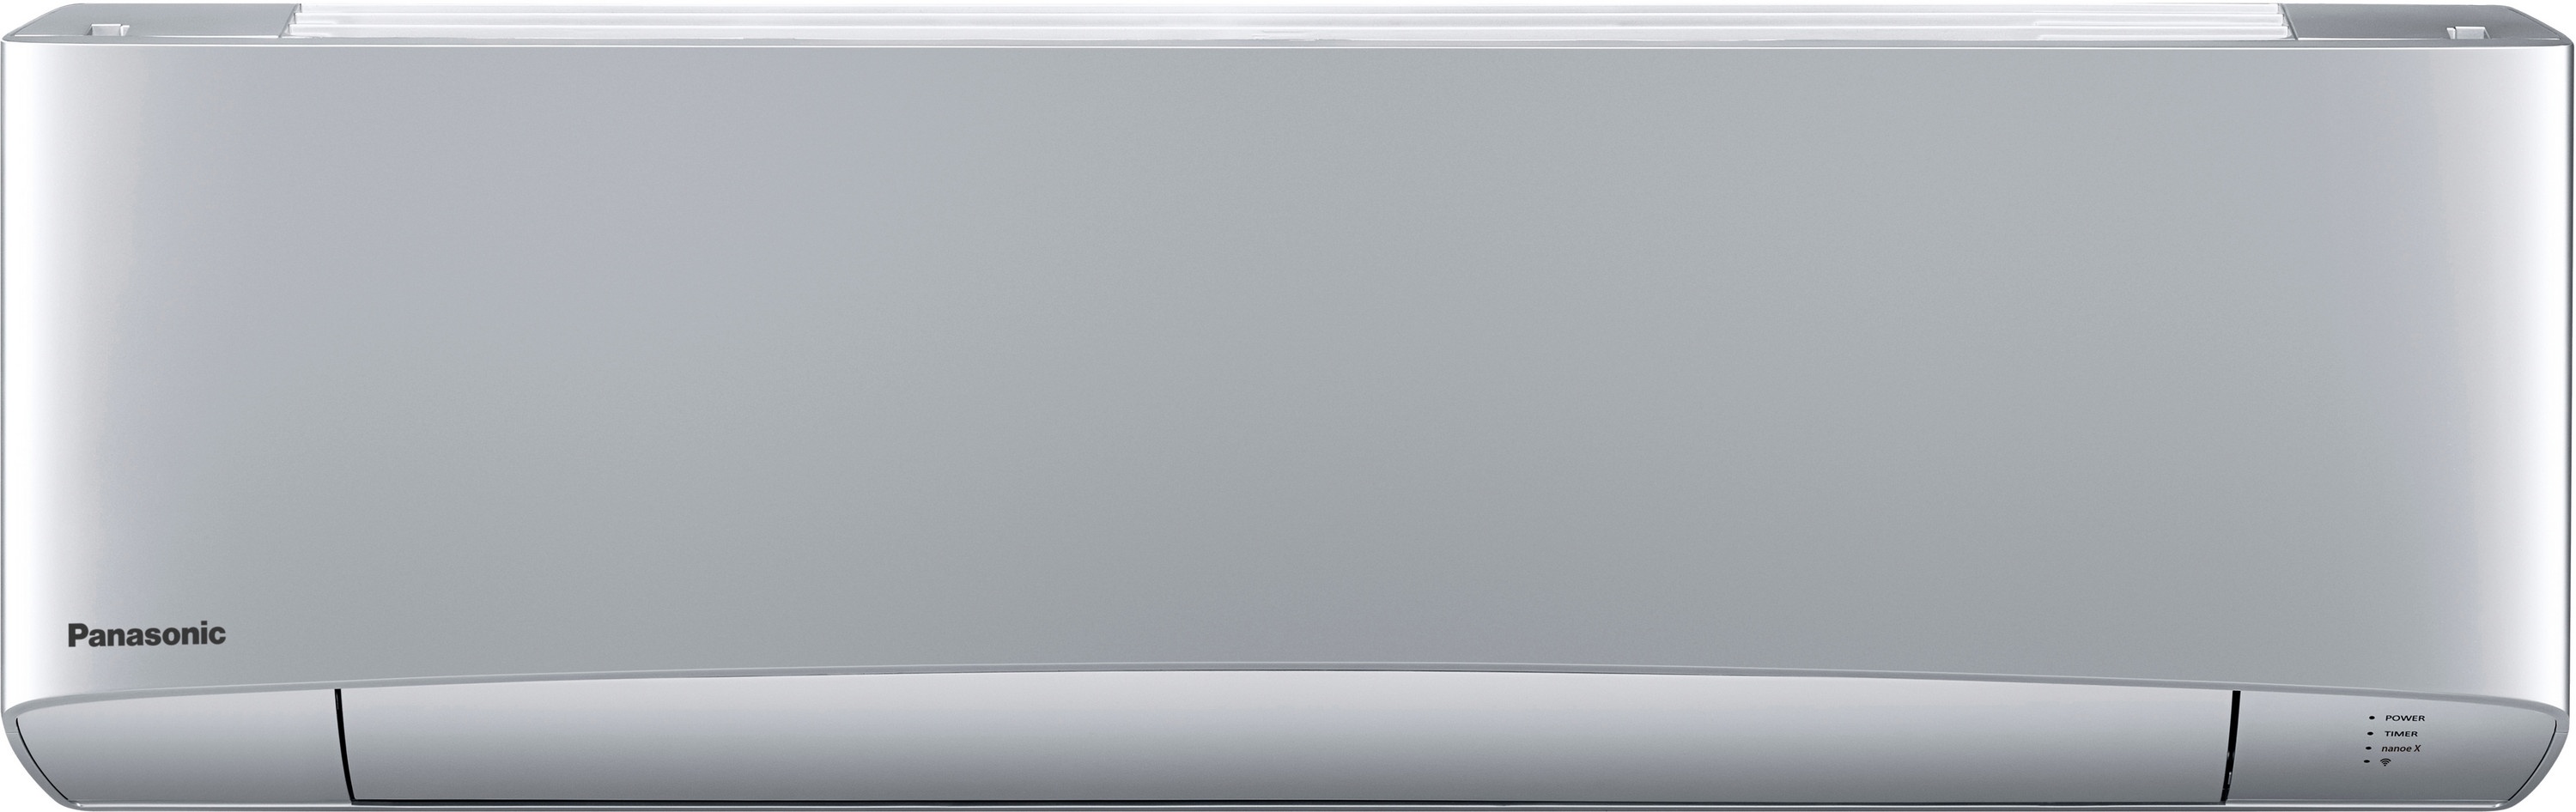 Кондиционер сплит-система Panasonic Flagship Silver CS/CU-XZ25TKEW цена 60998.00 грн - фотография 2